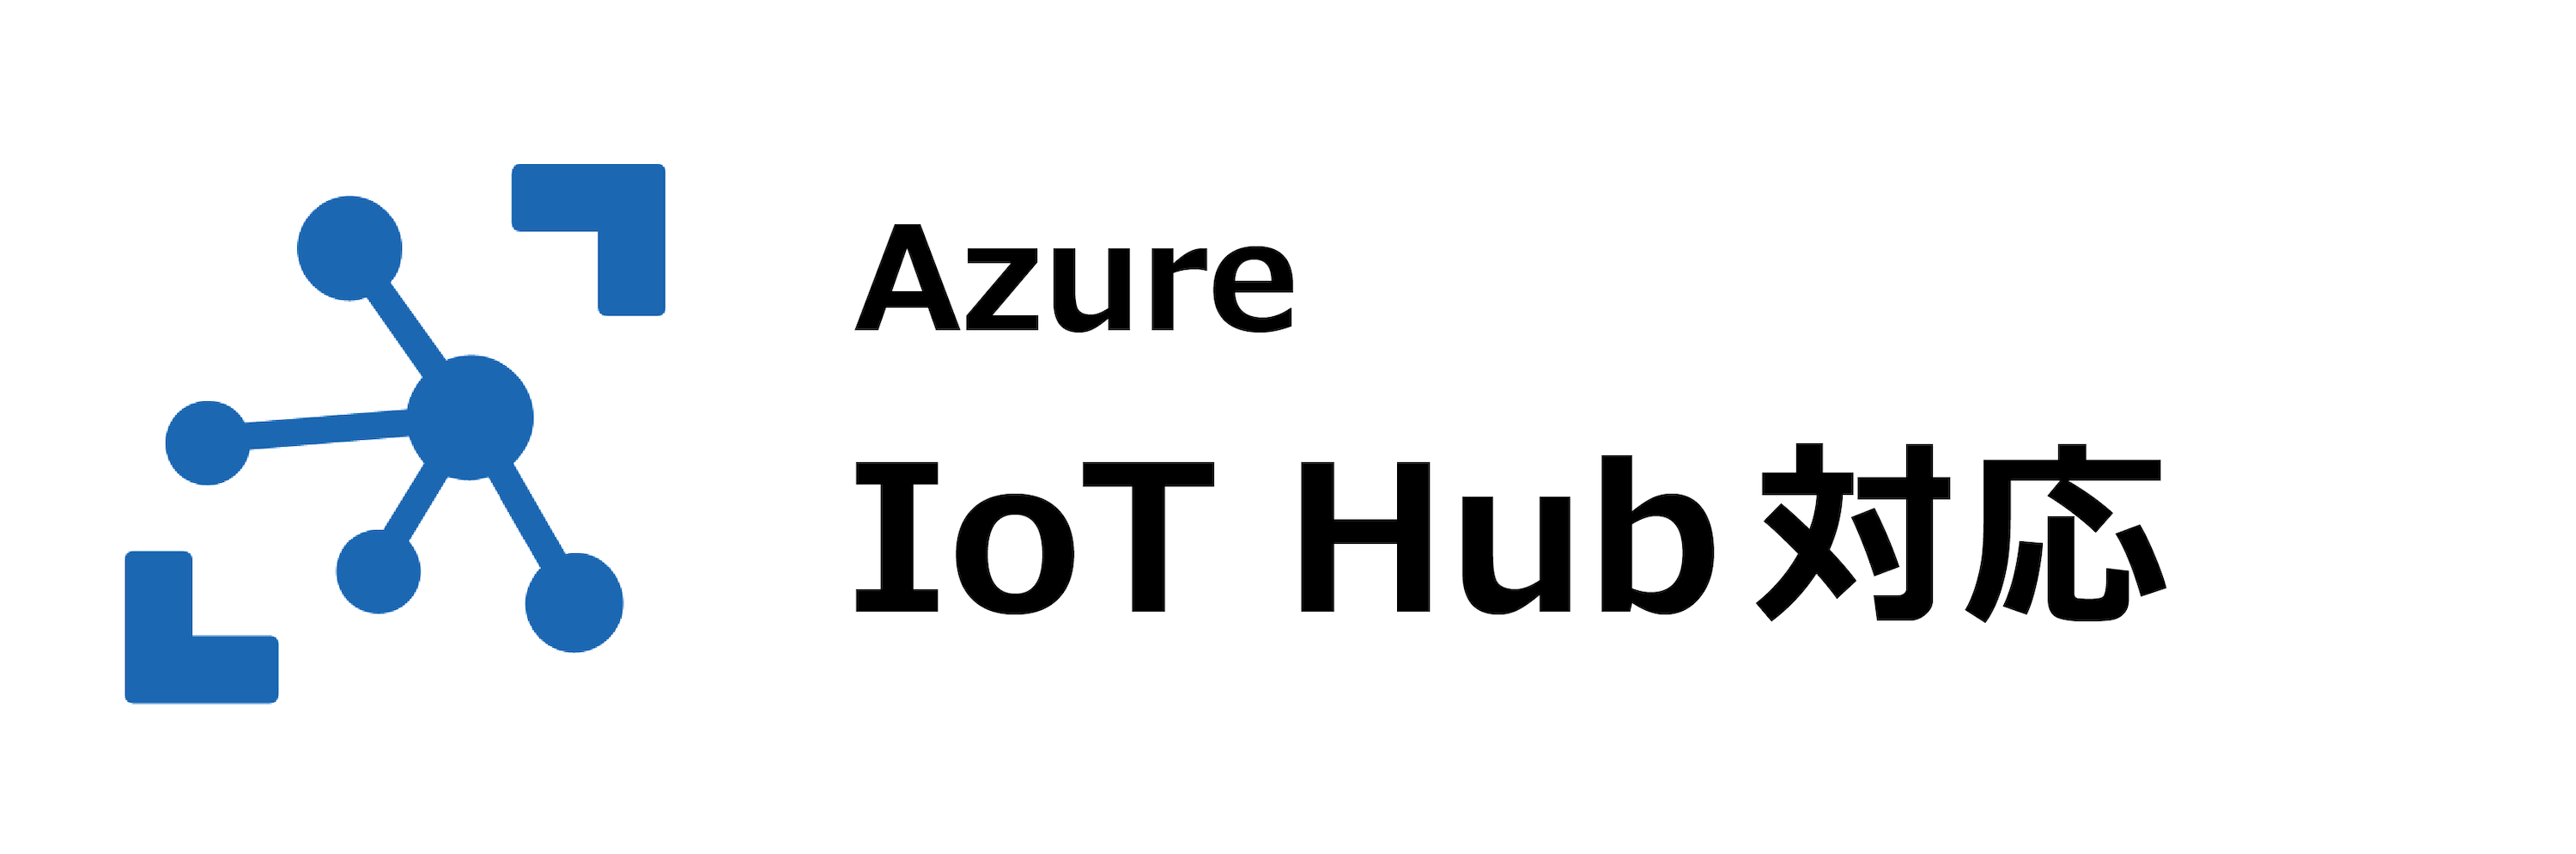 Azure IoT Hub対応